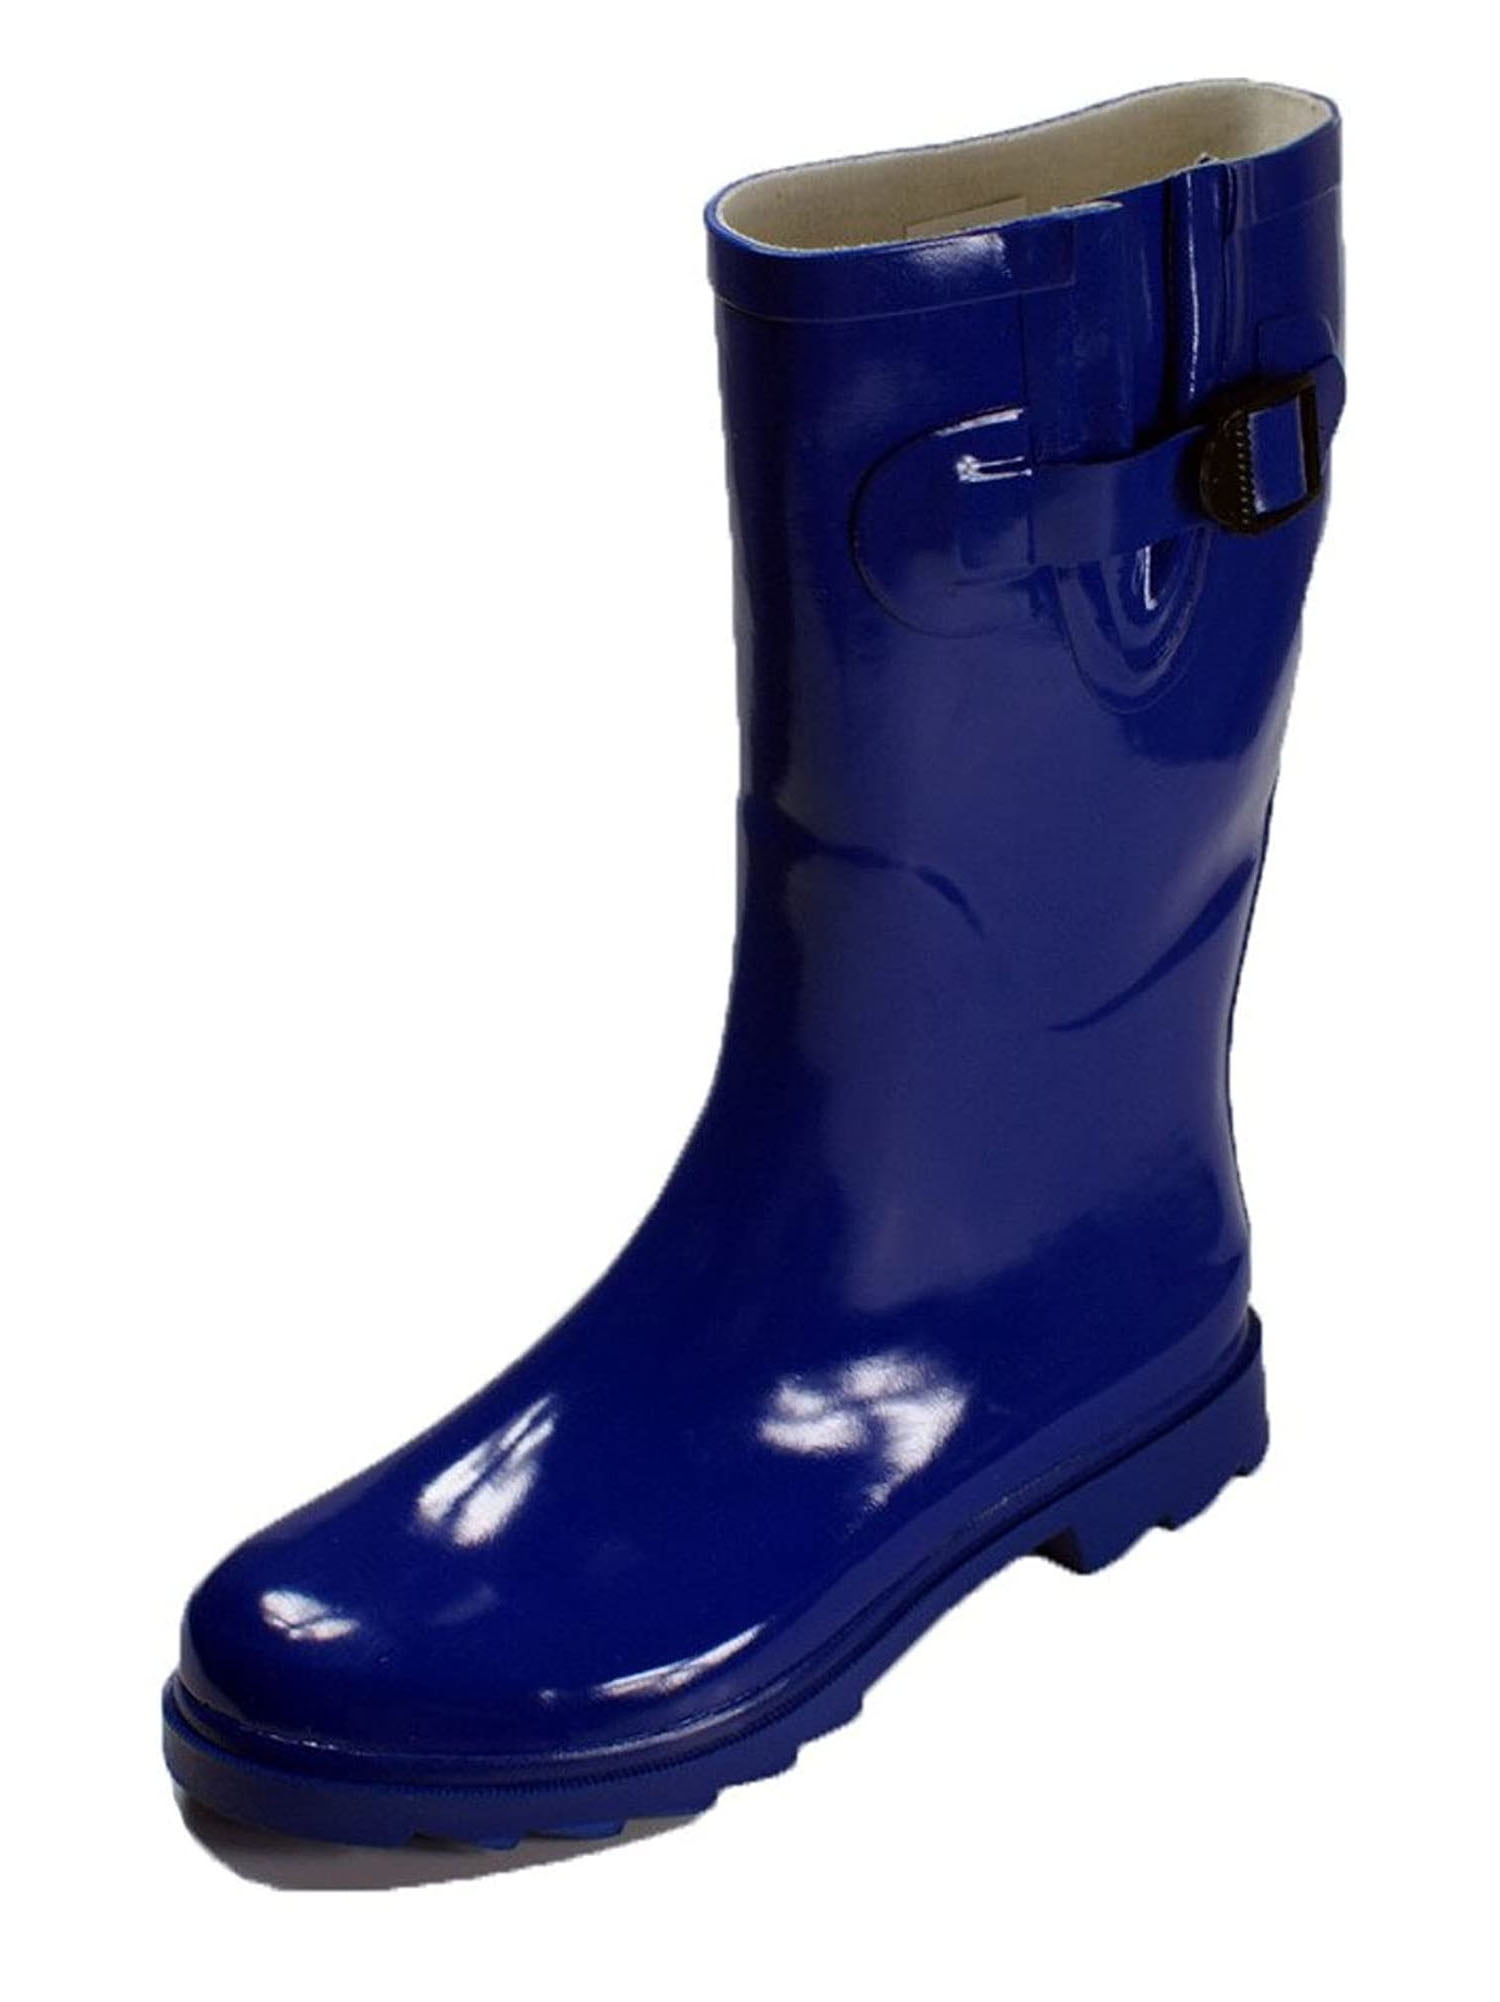 water boots walmart